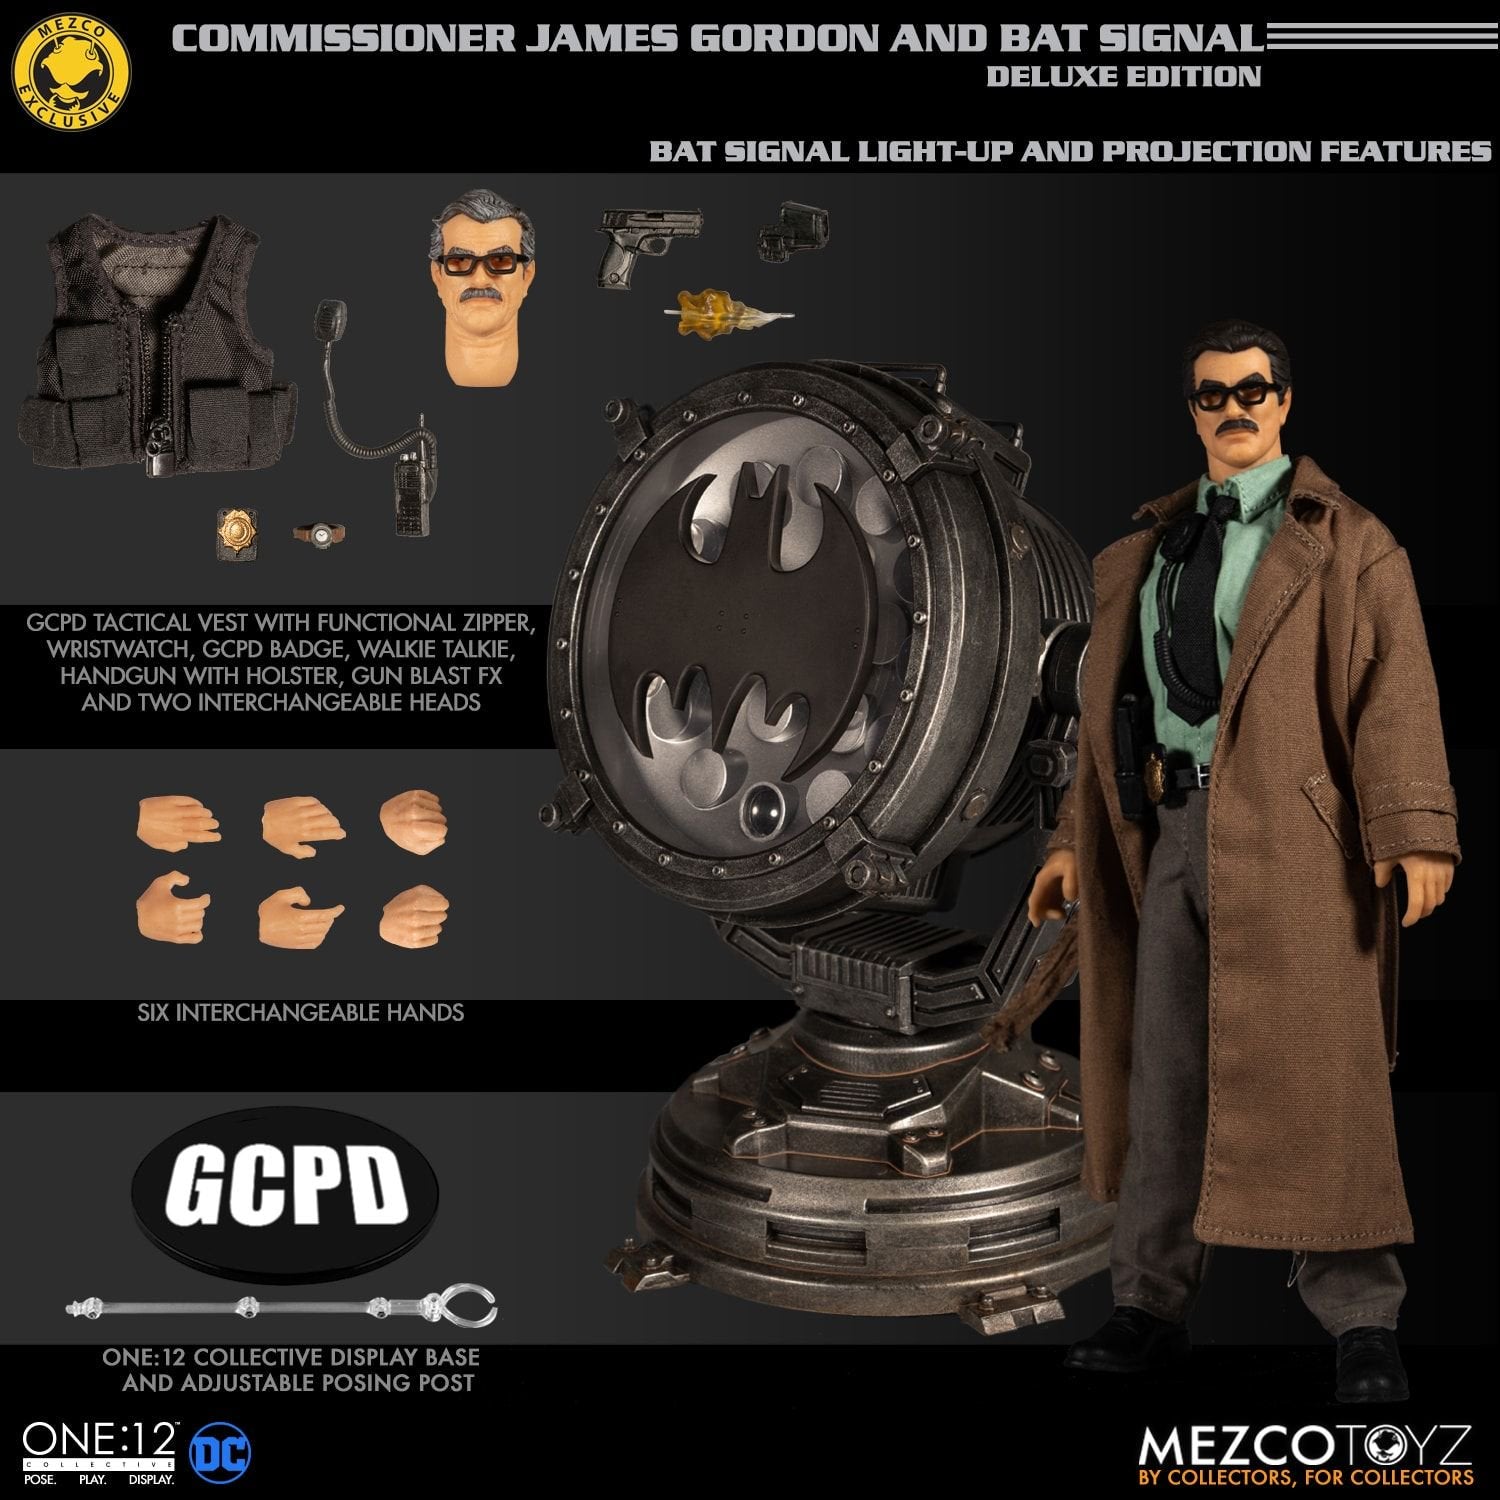 SDCC 2019 Mezco Toyz ONE:12 Commissioner James Gordon and Bat Signal Deluxe Edition Action Figure